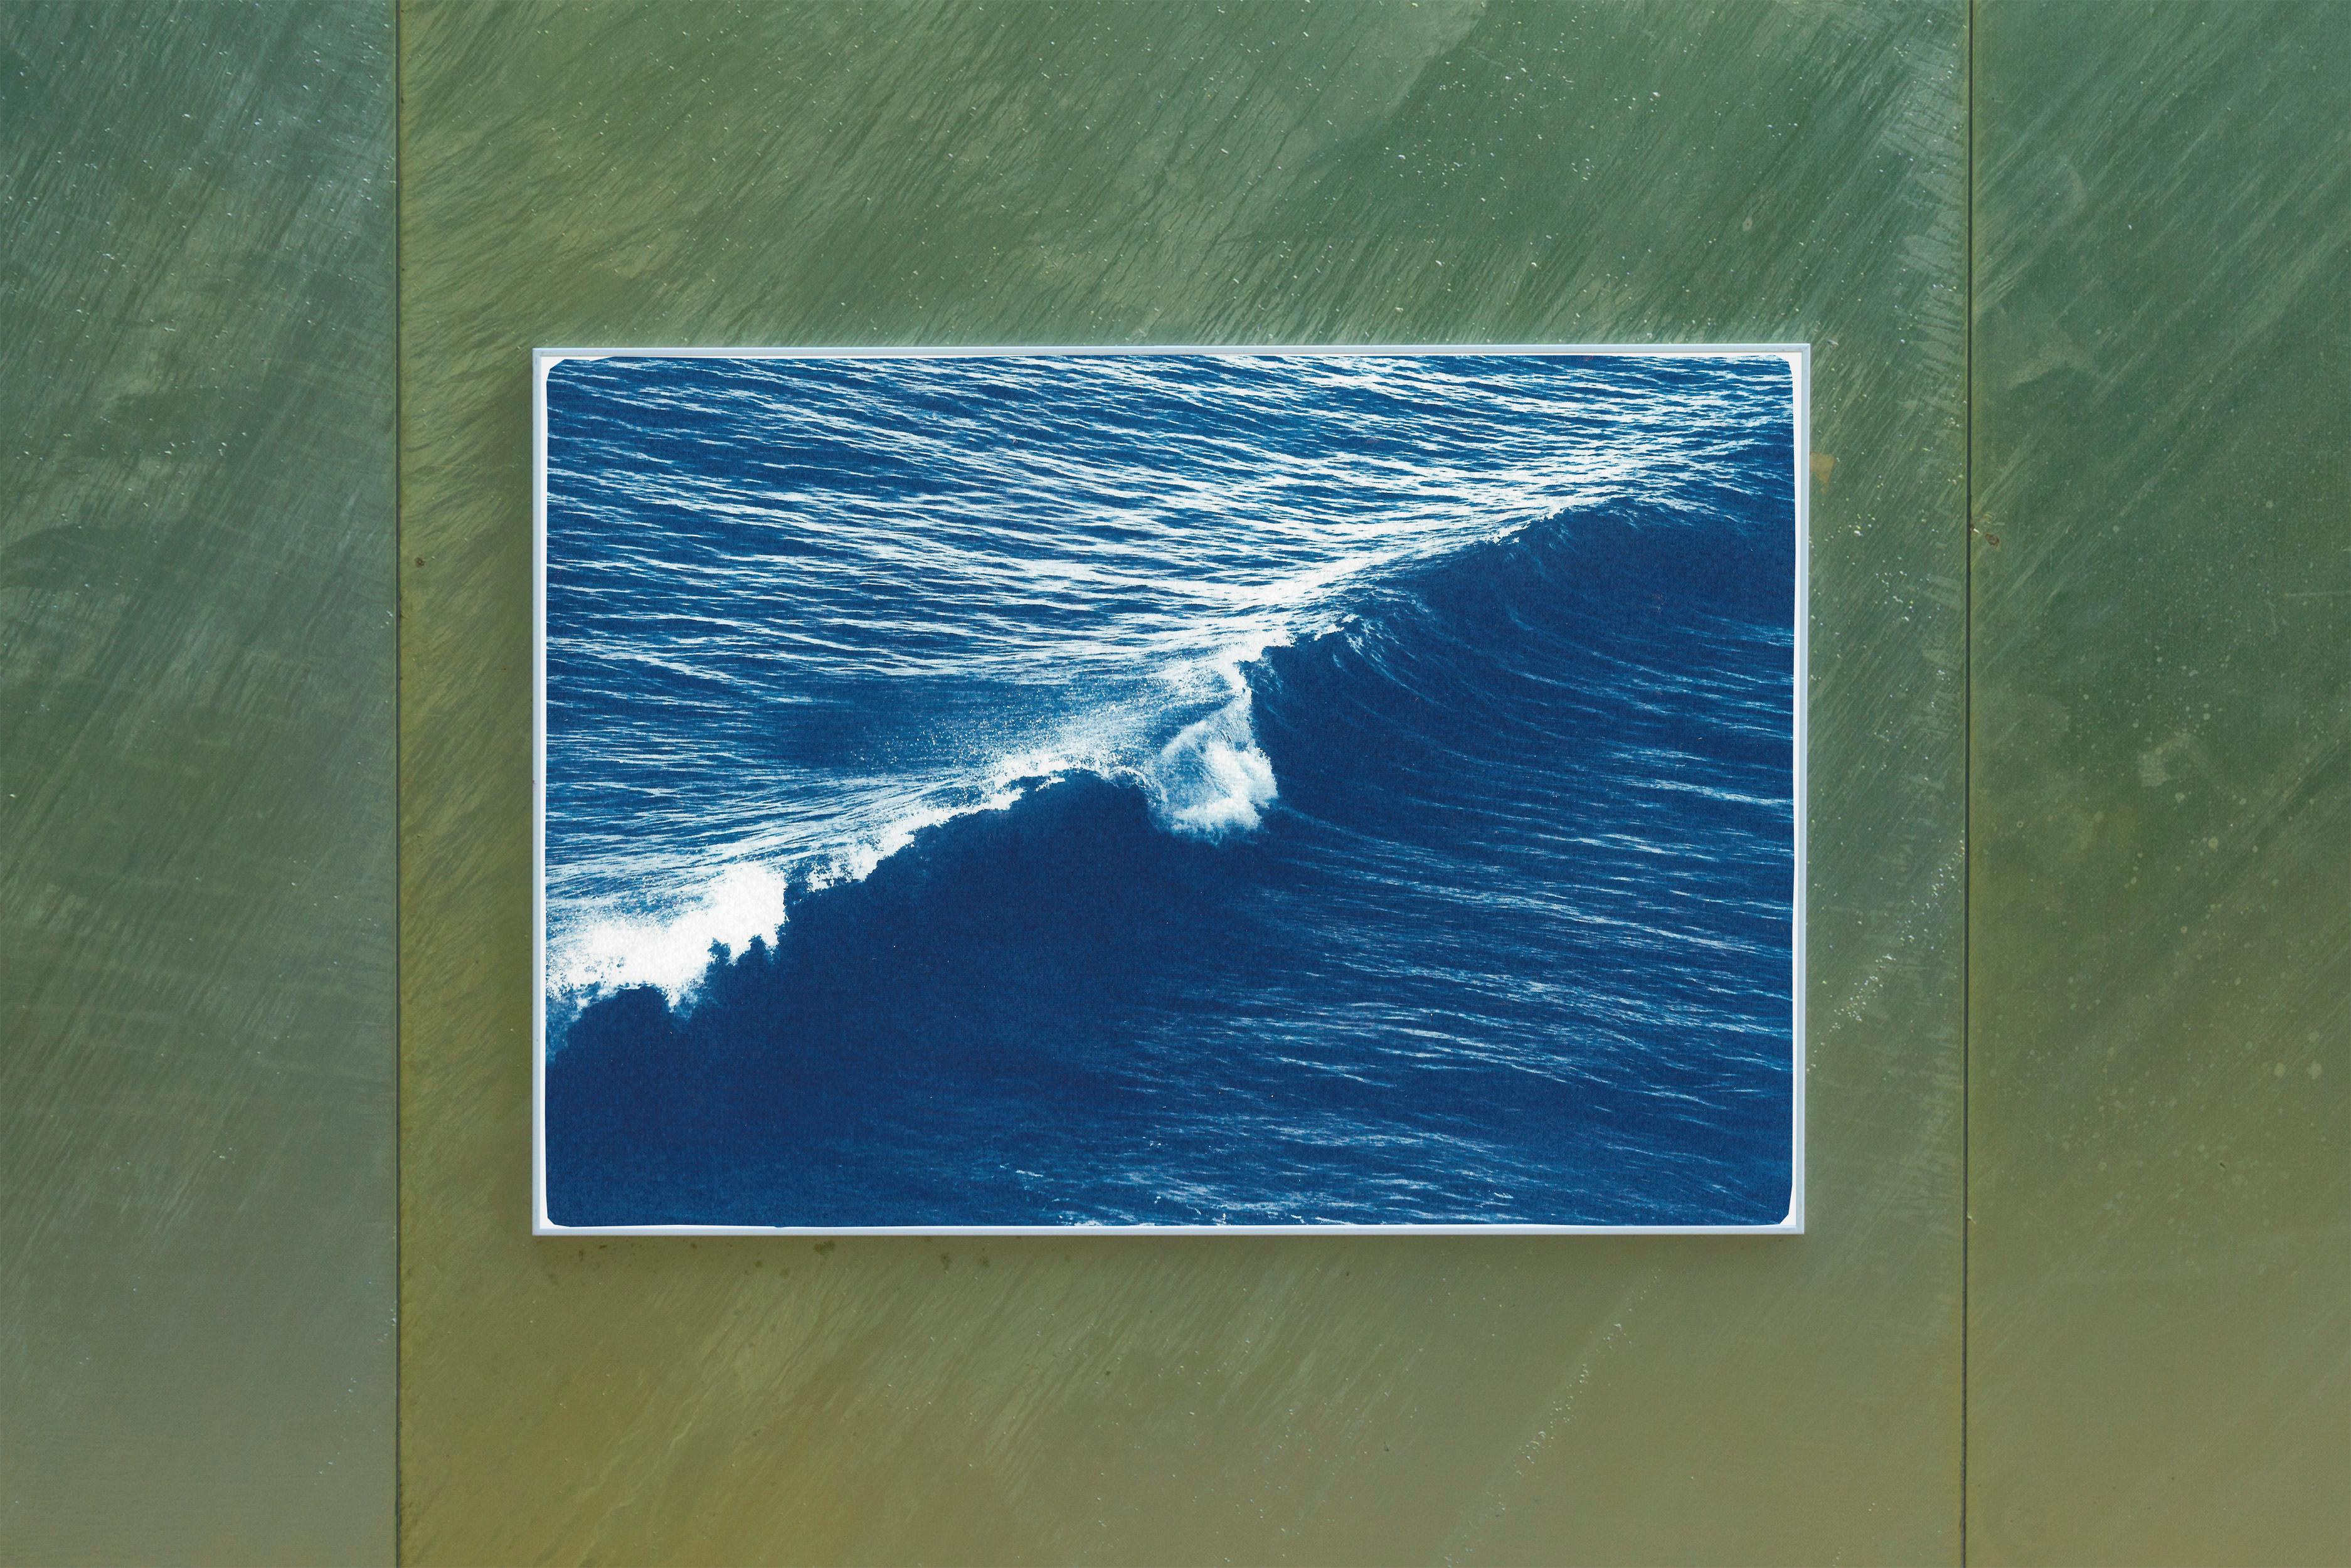 Venice Beach Seascape, Long Wave, Nautical Scene in Blue Tones, Limited Edition 1